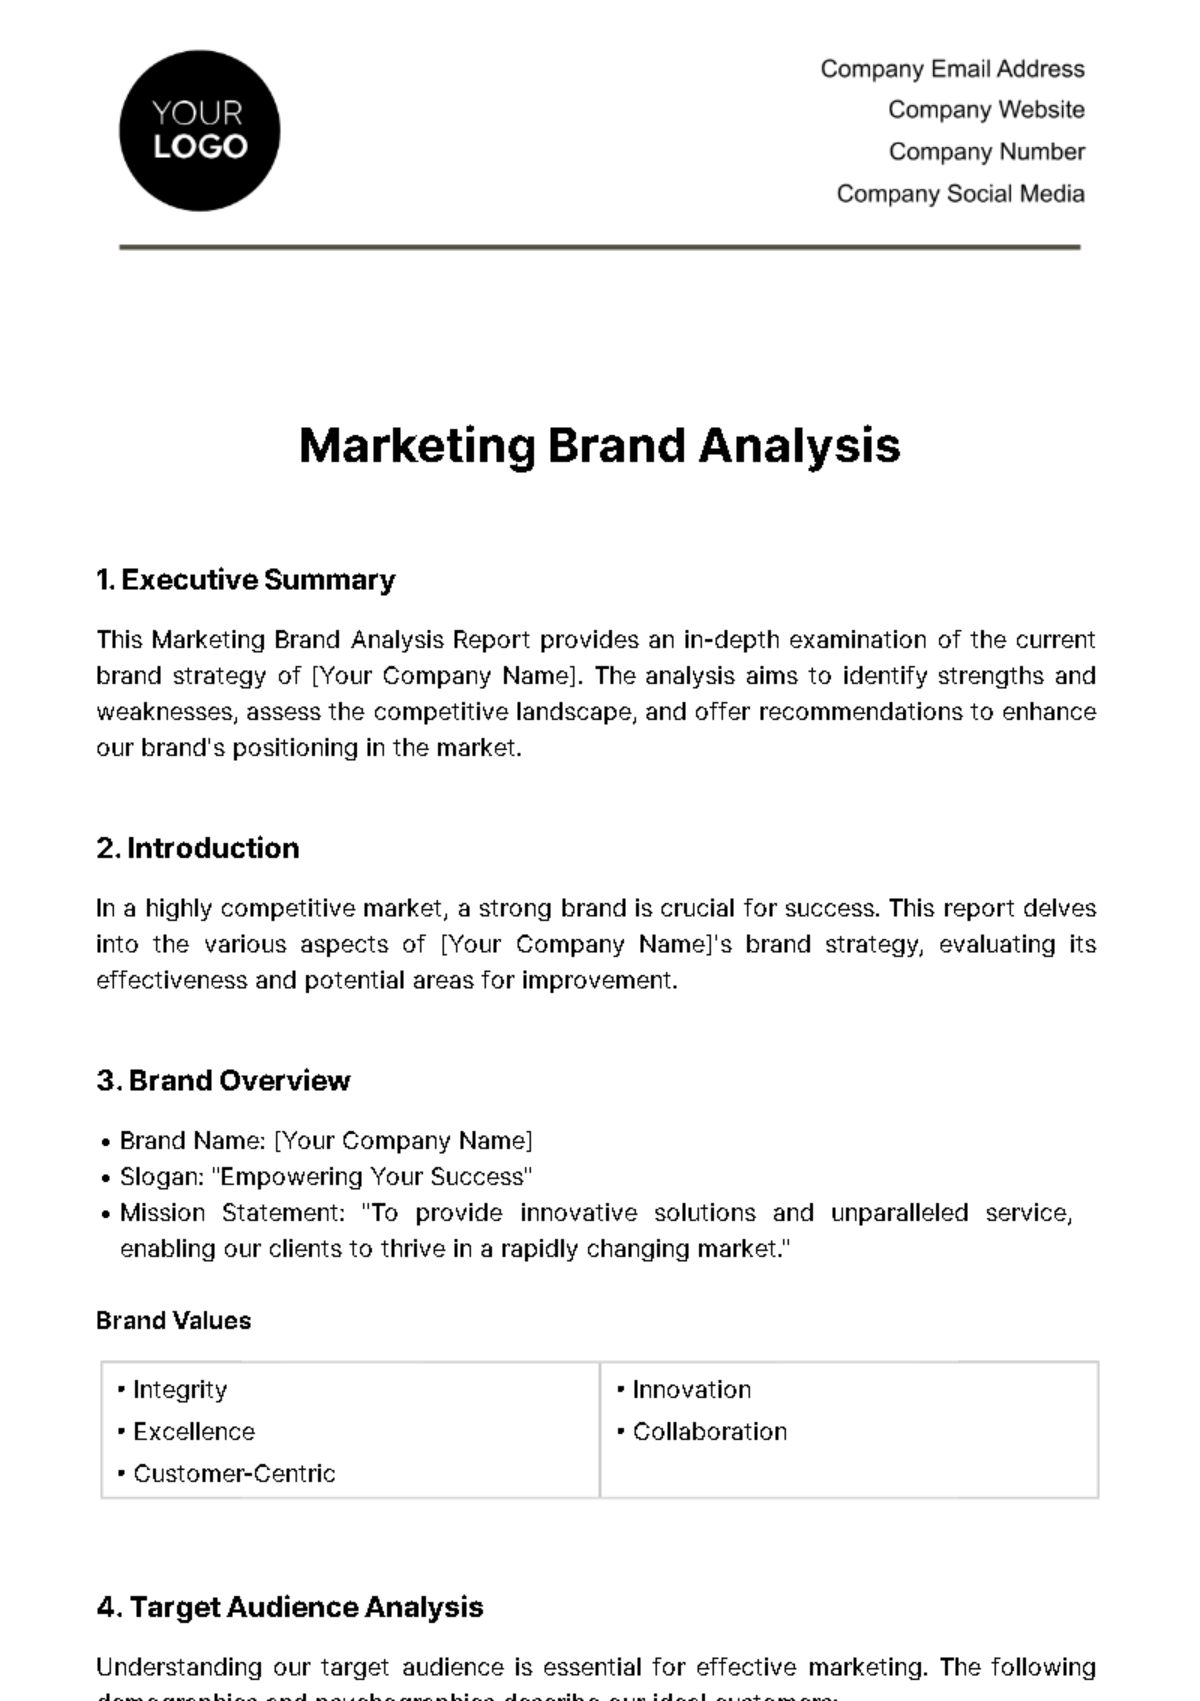 Marketing Brand Analysis Template